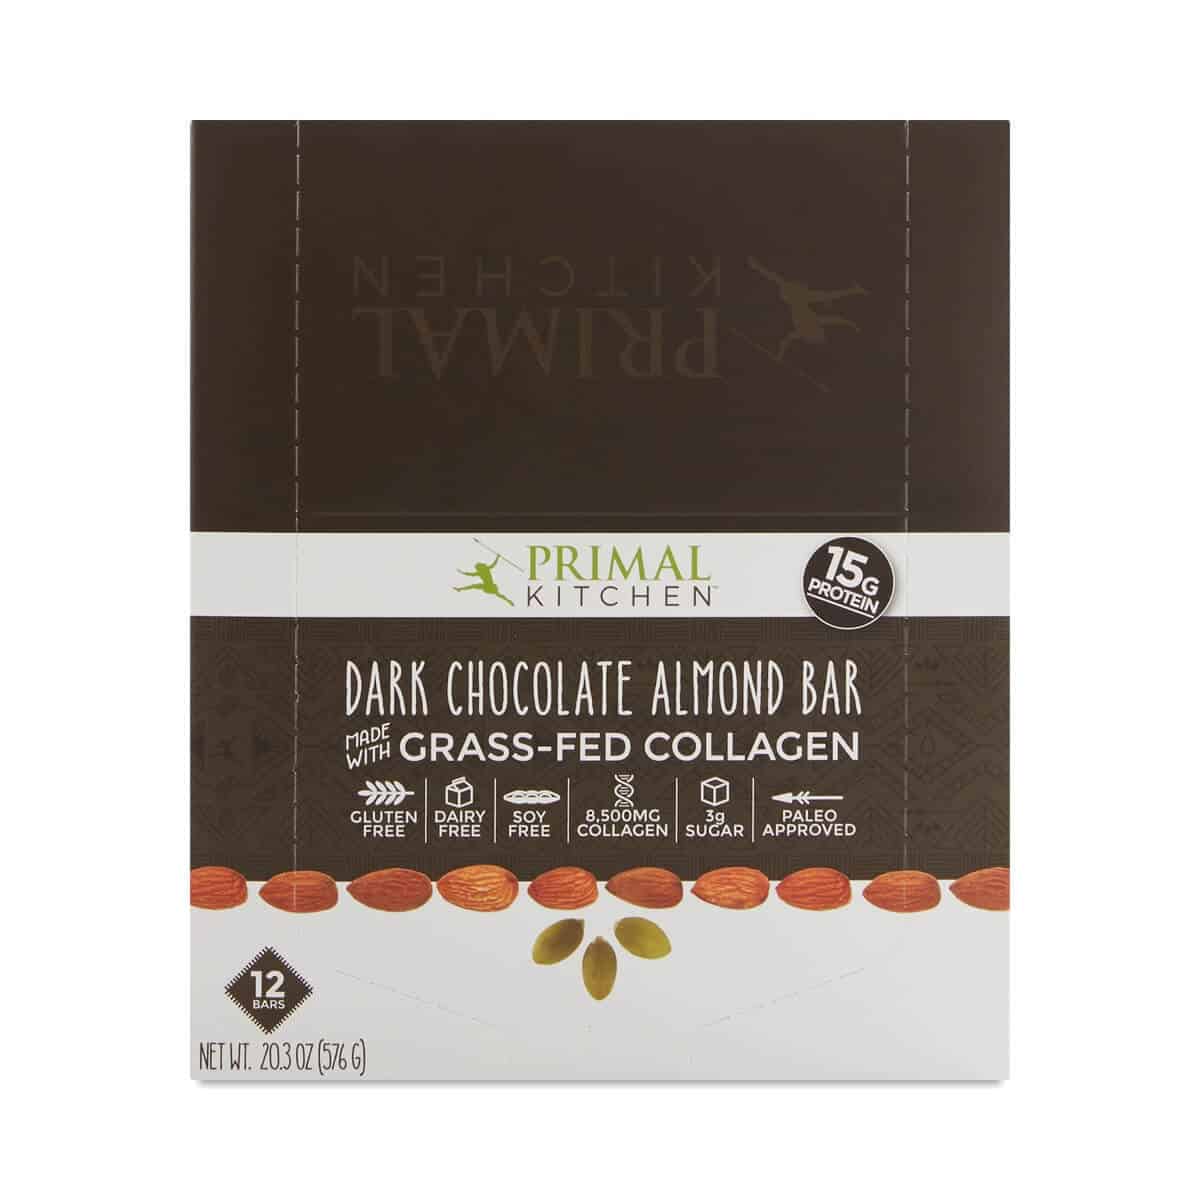 Dark Chocolate Almond Bar with Grass-Fed Collagen, 12-Pack